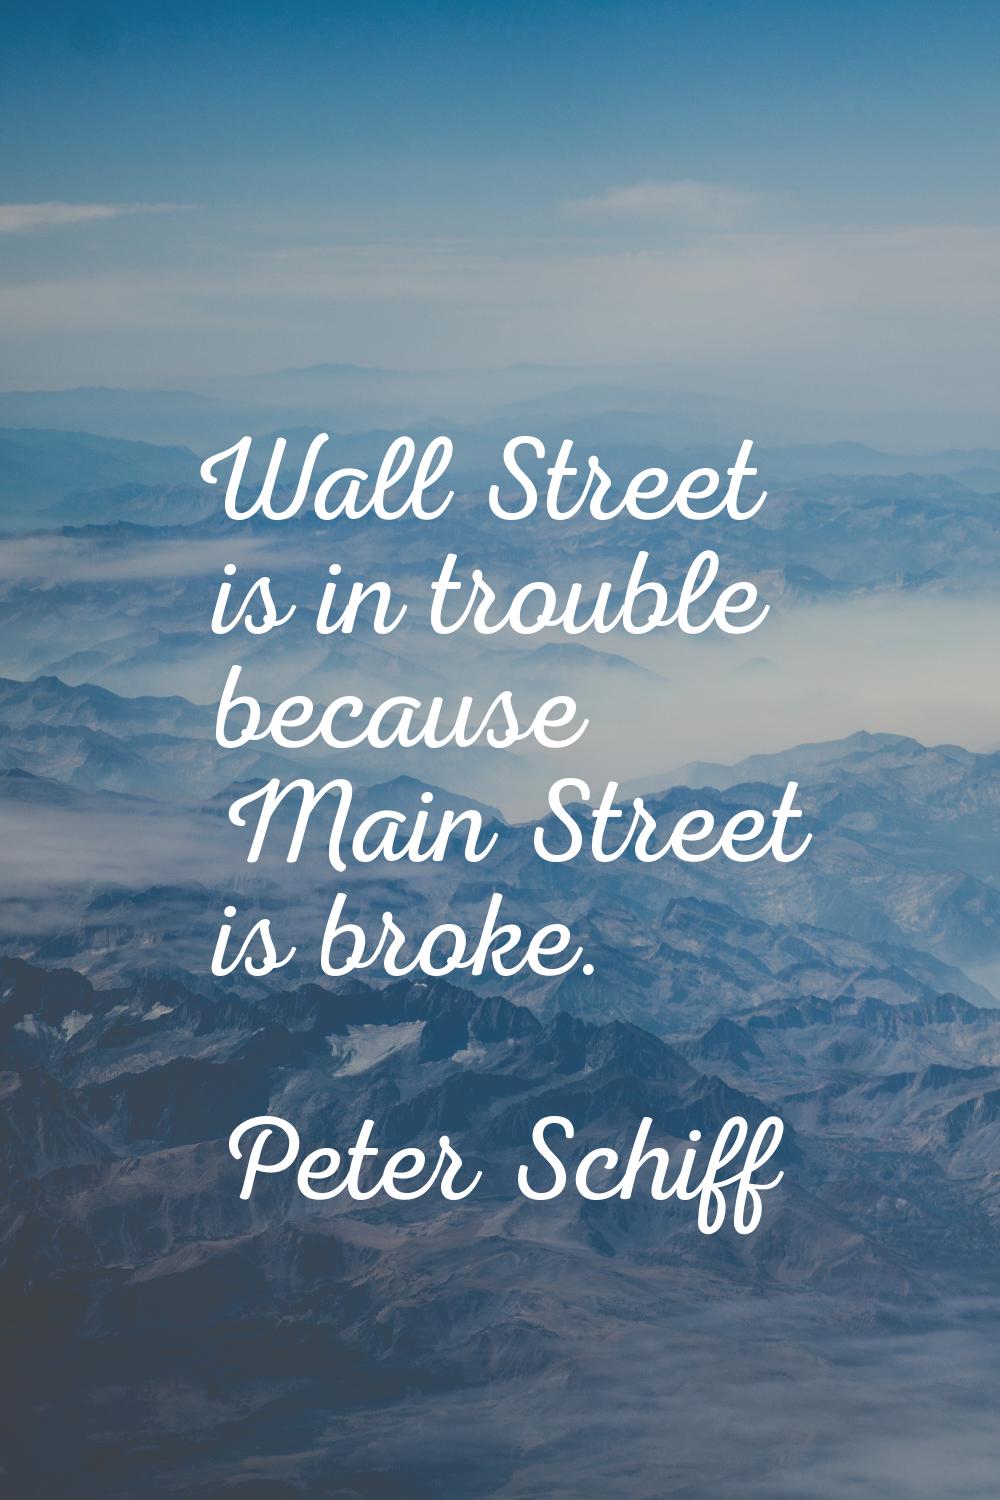 Wall Street is in trouble because Main Street is broke.